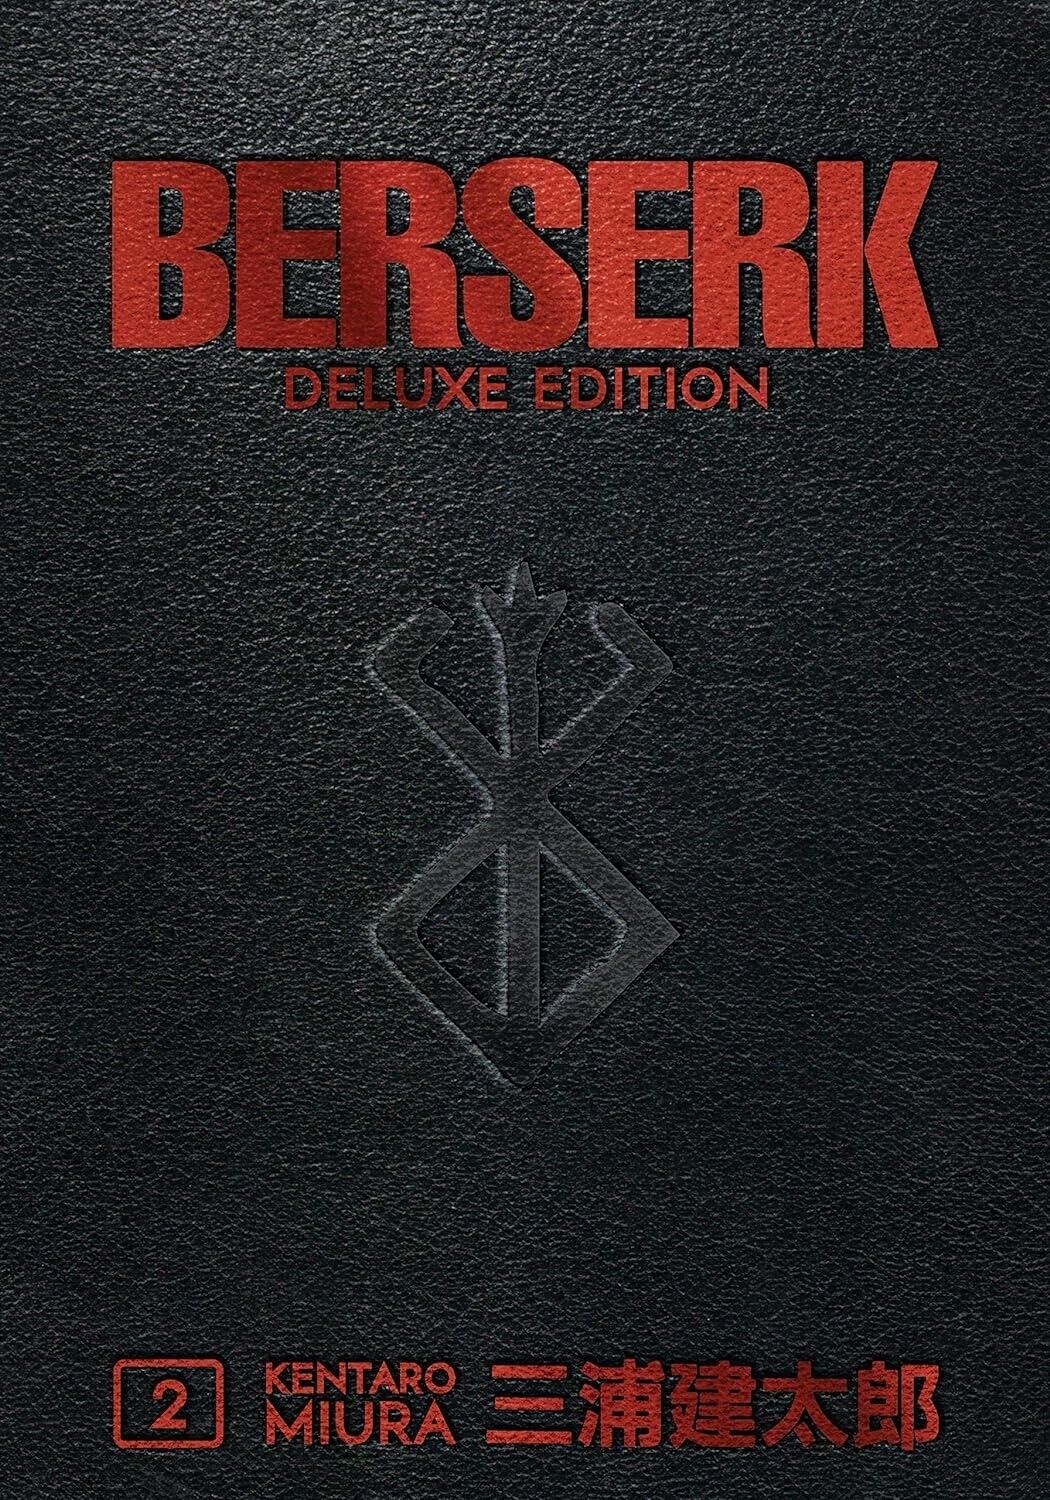 Berserk Deluxe Volume 2 Hardcover - Epic Fantasy Manga L3.76